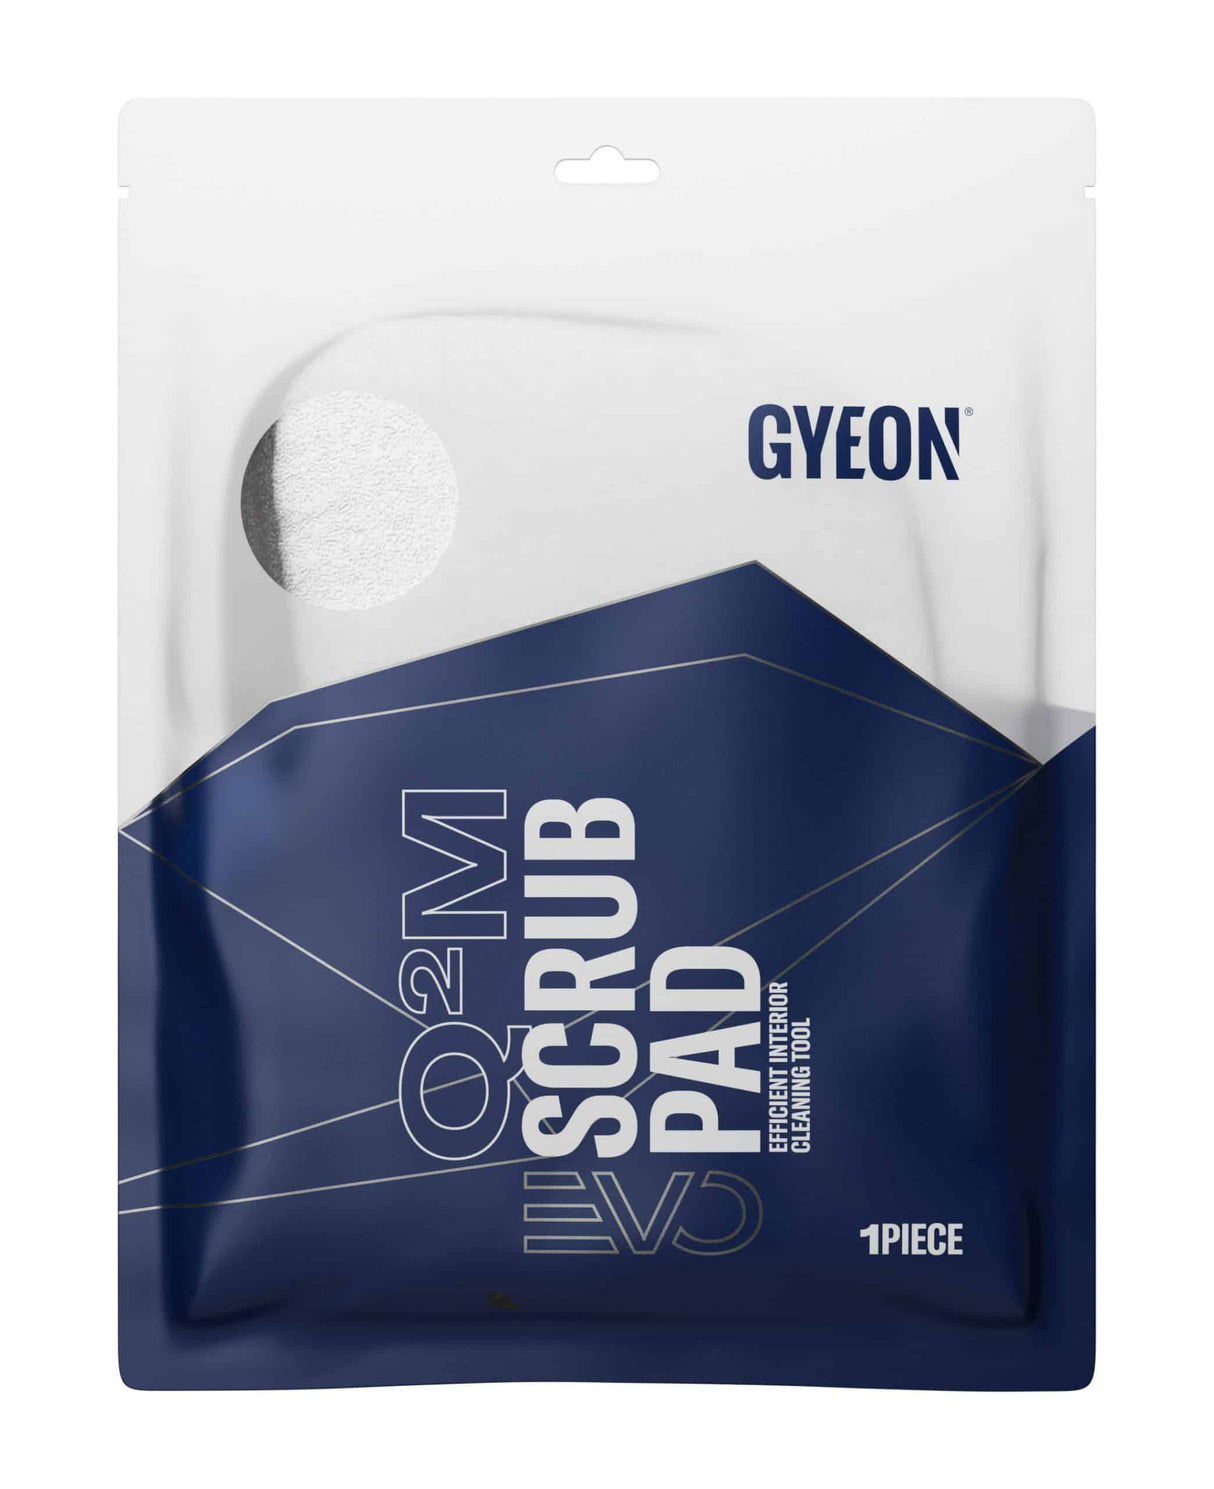 Gyeon Q2M Accessories ScrubPad EVO